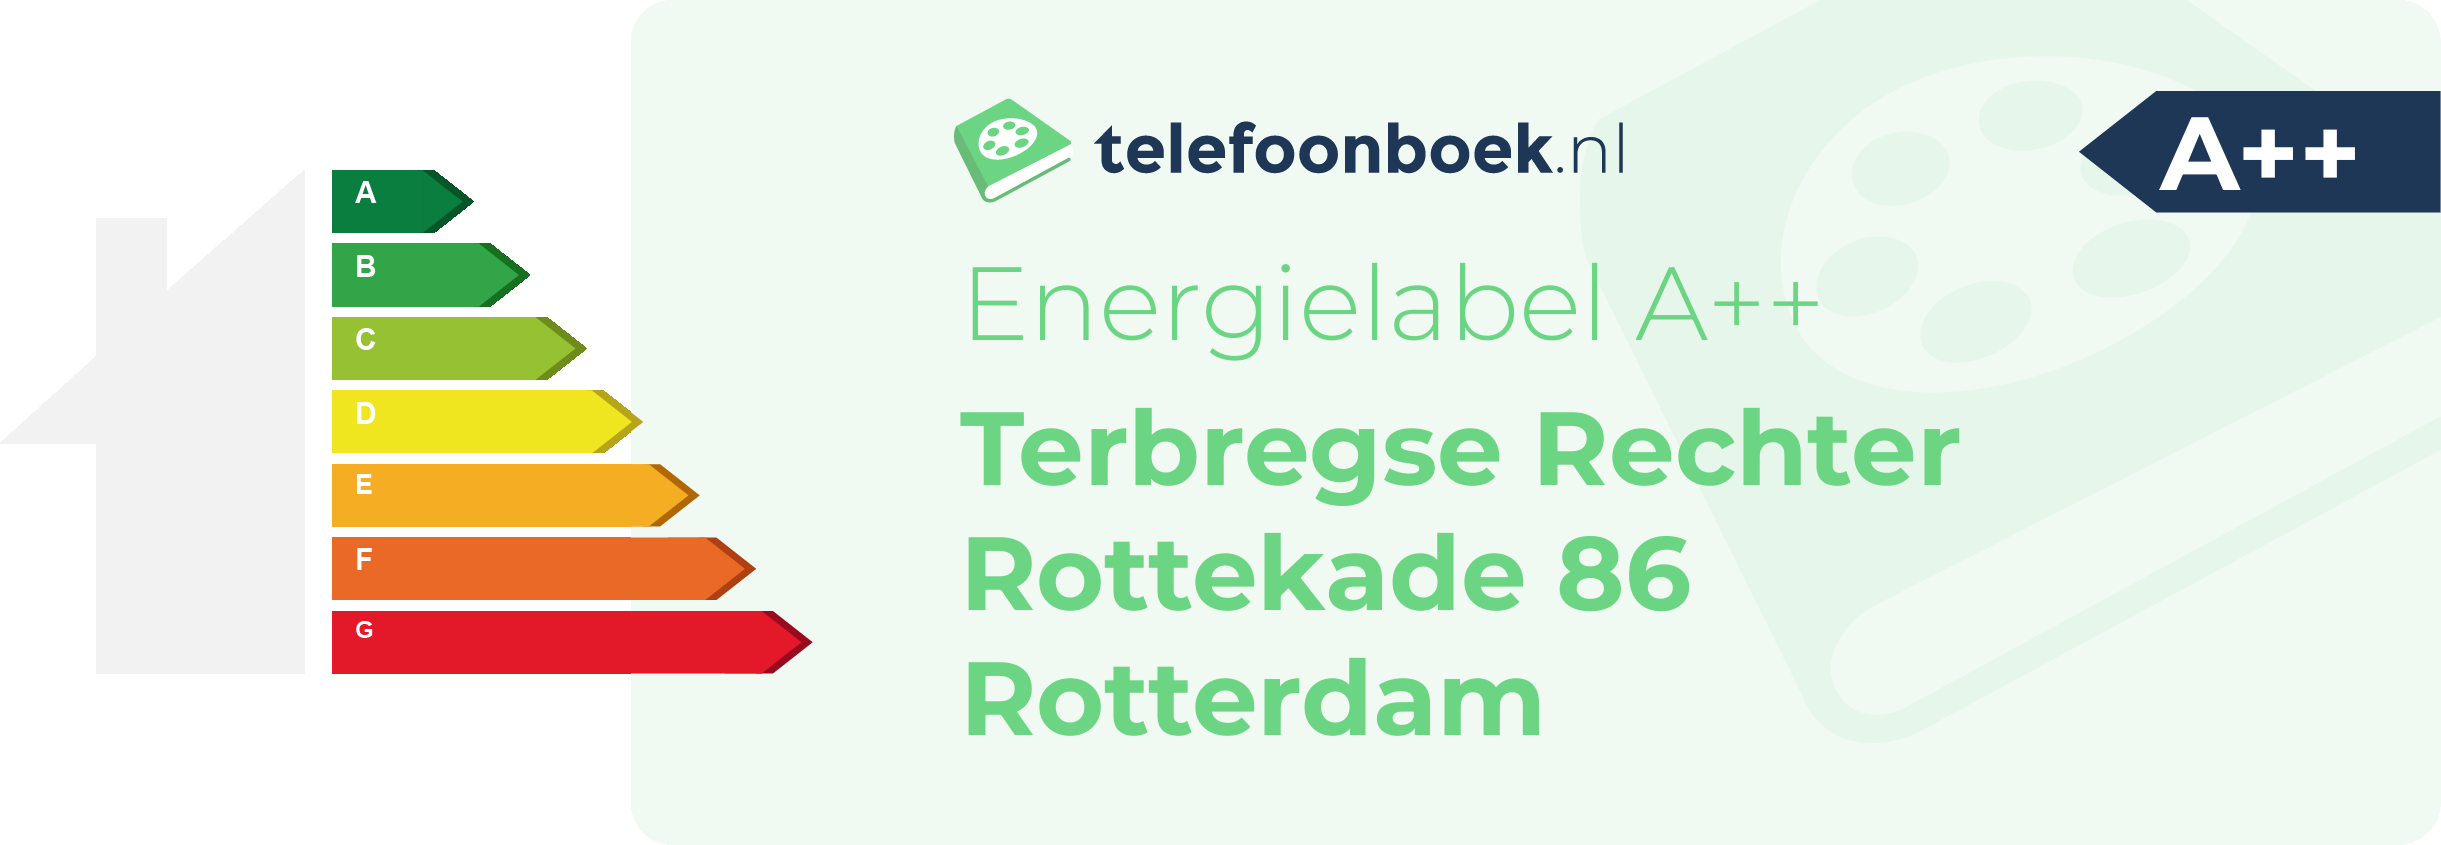 Energielabel Terbregse Rechter Rottekade 86 Rotterdam